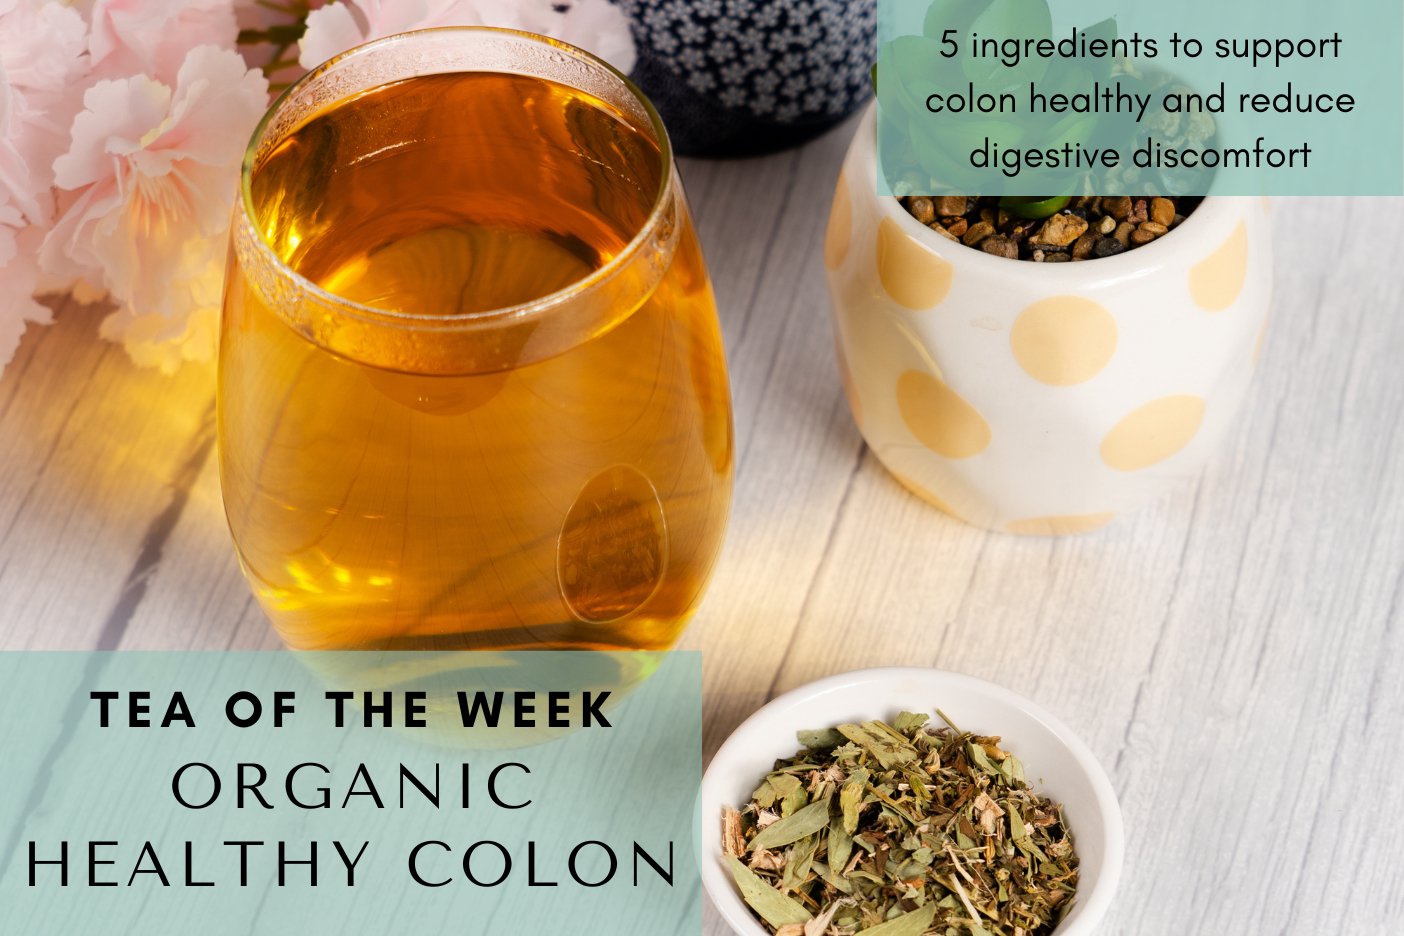 Organic Healthy Colon Tea | Tea of the Week - Full Leaf Tea Company